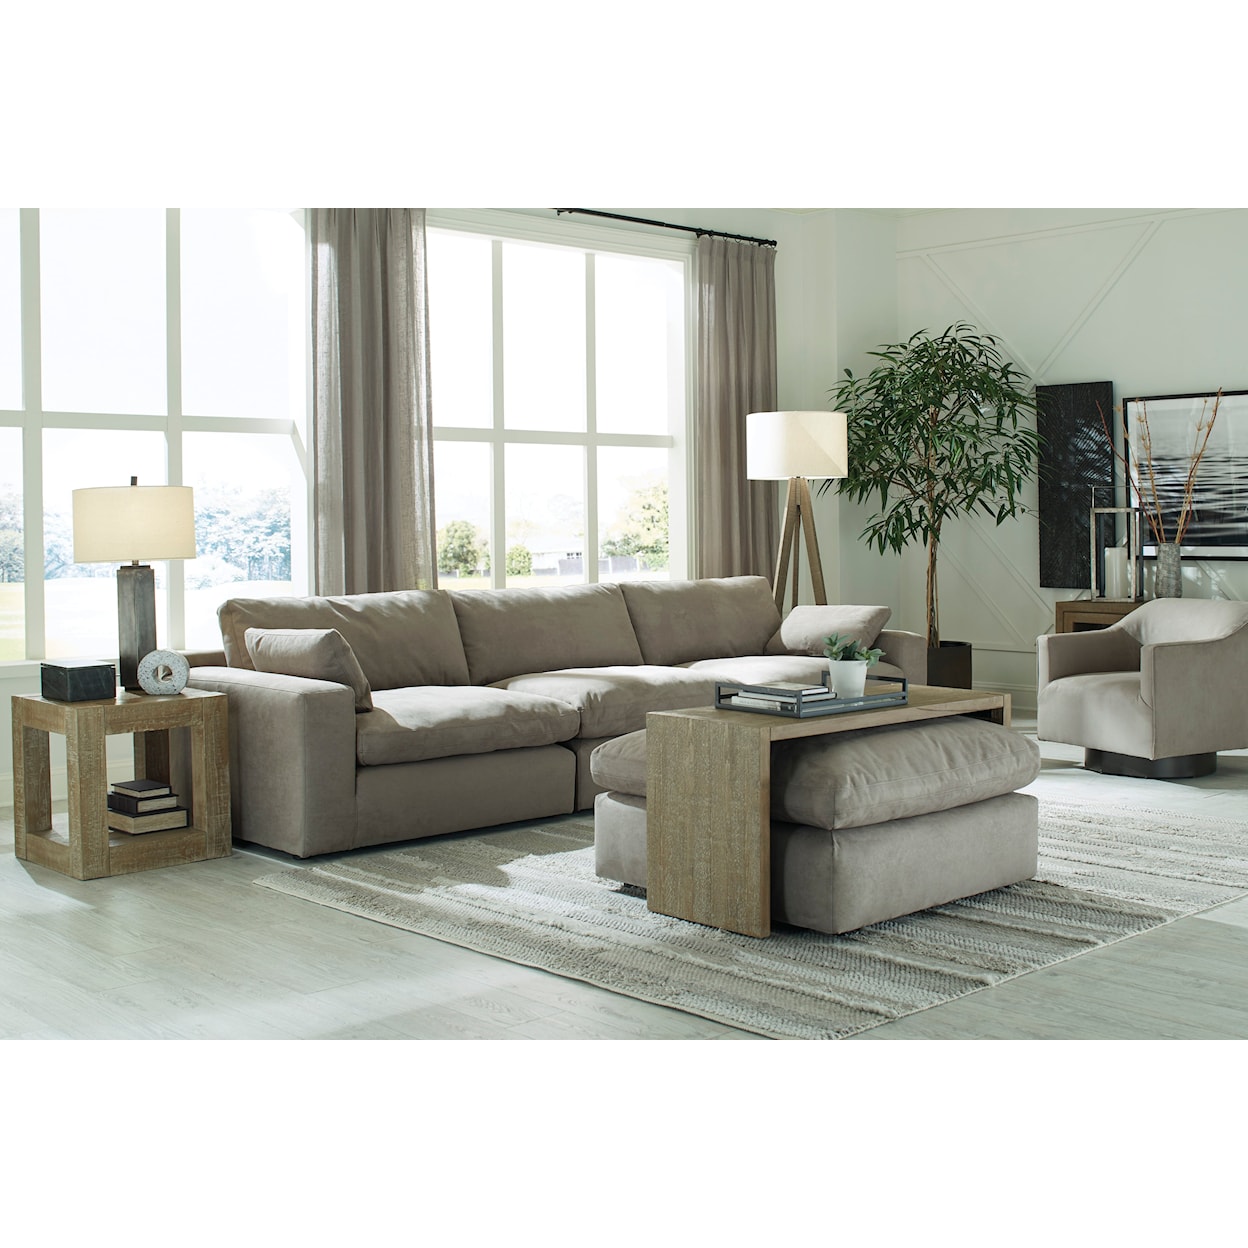 Ashley Furniture Signature Design Next-Gen Gaucho Modular Sofa